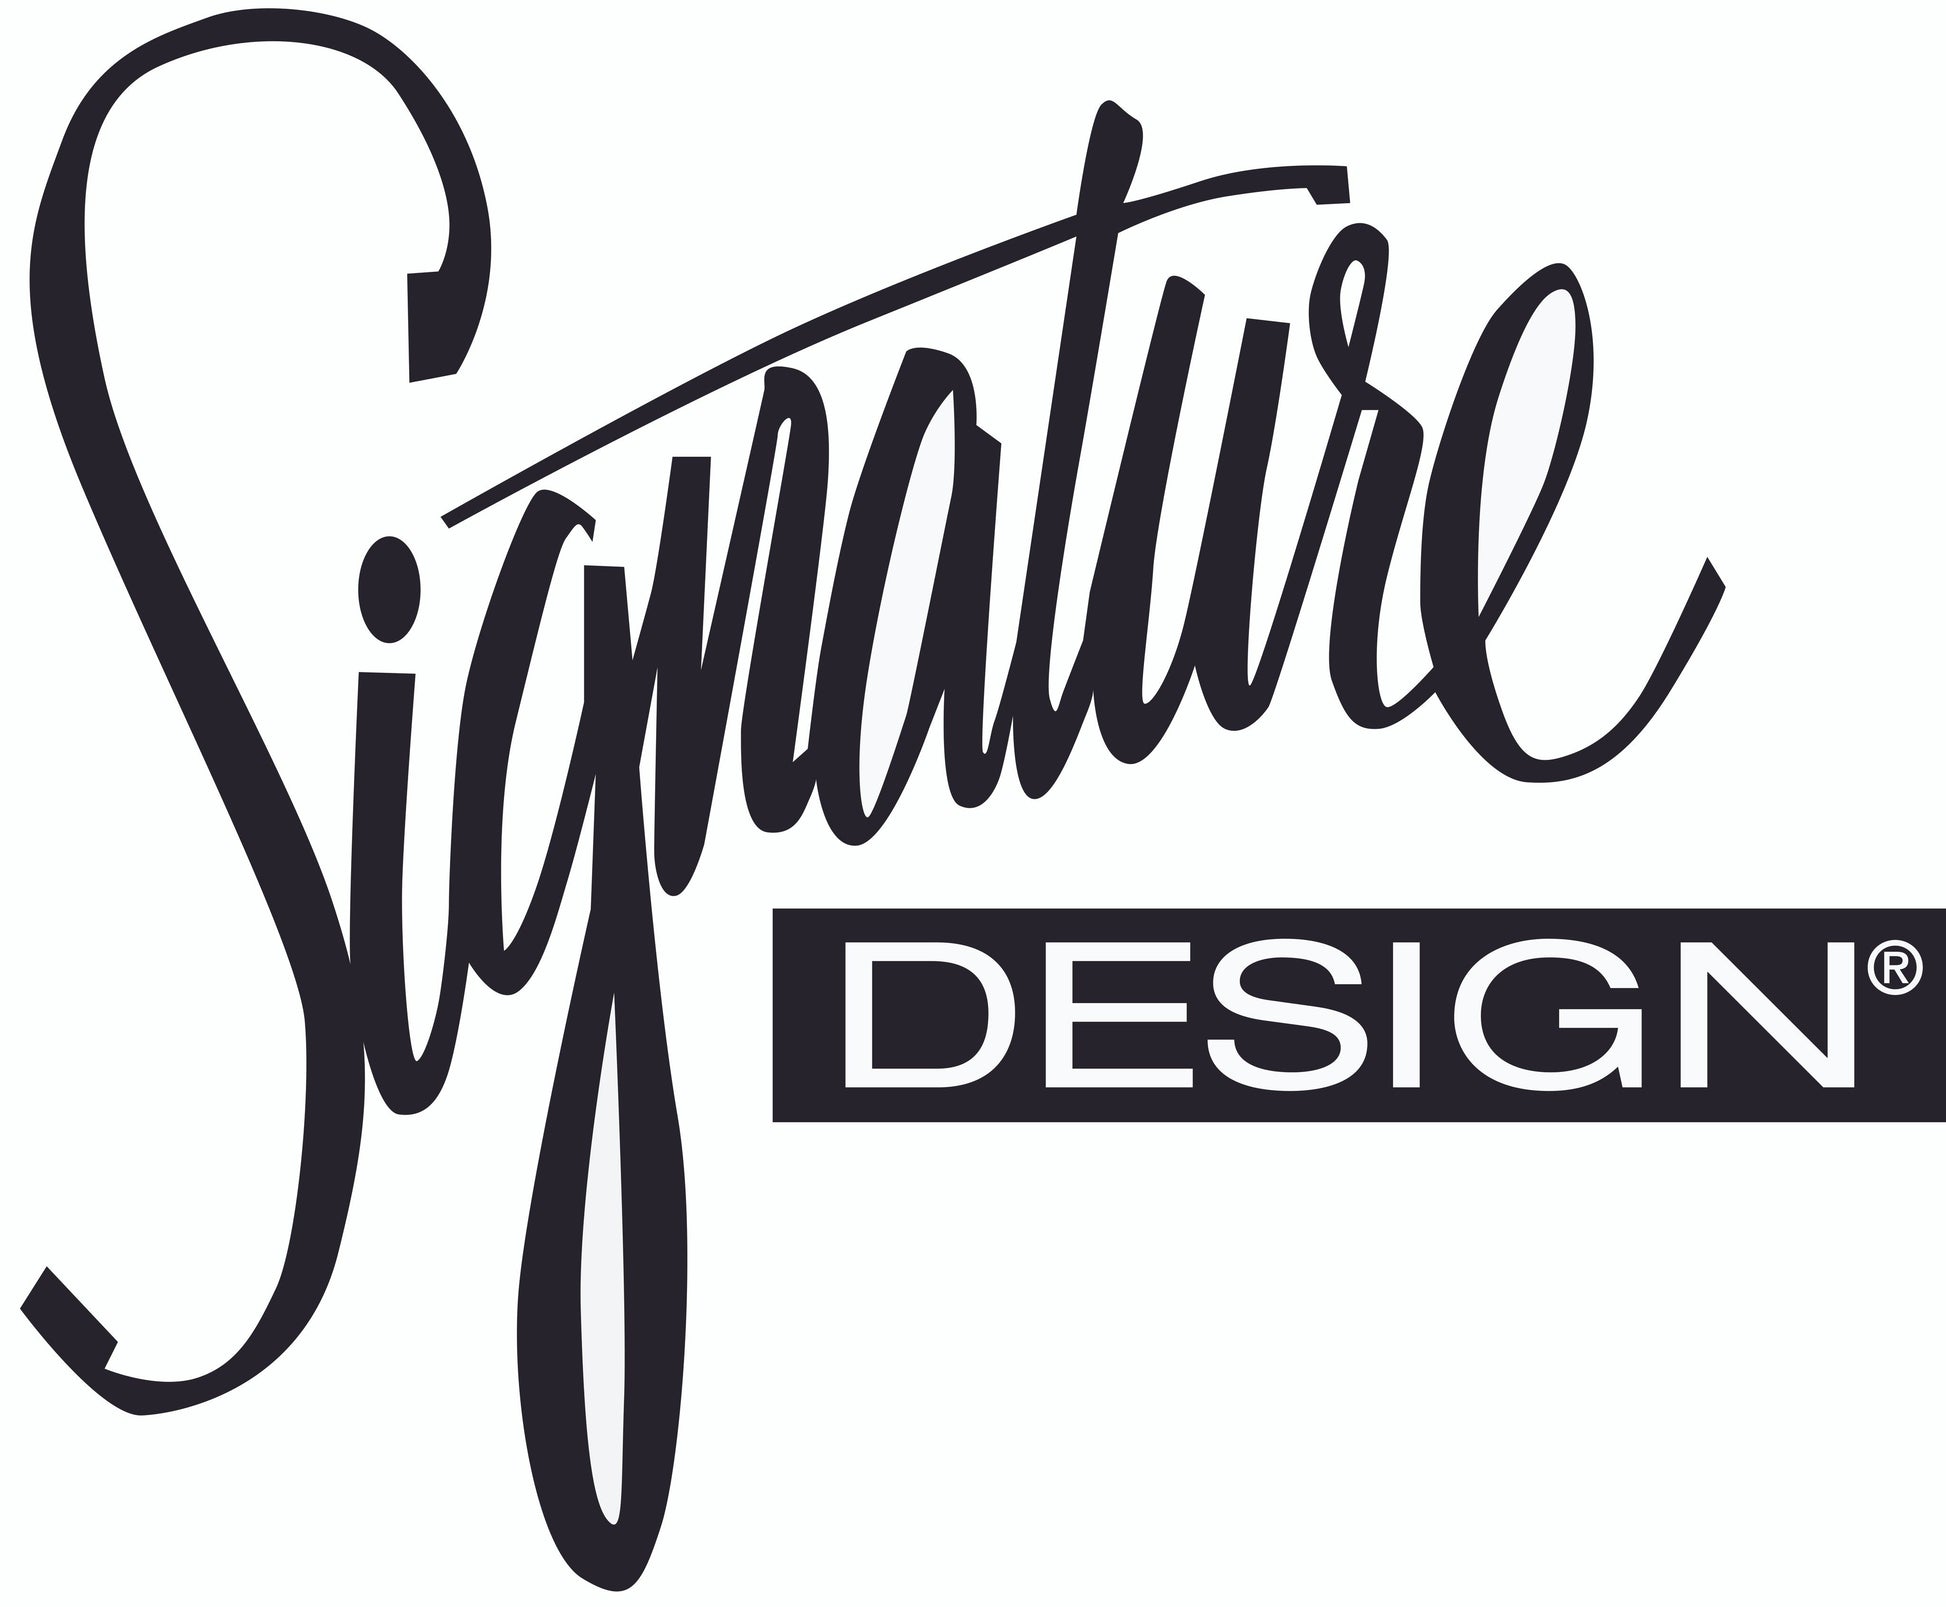 Genoa Queen Sofa Sleeper Signature Design by Ashley®